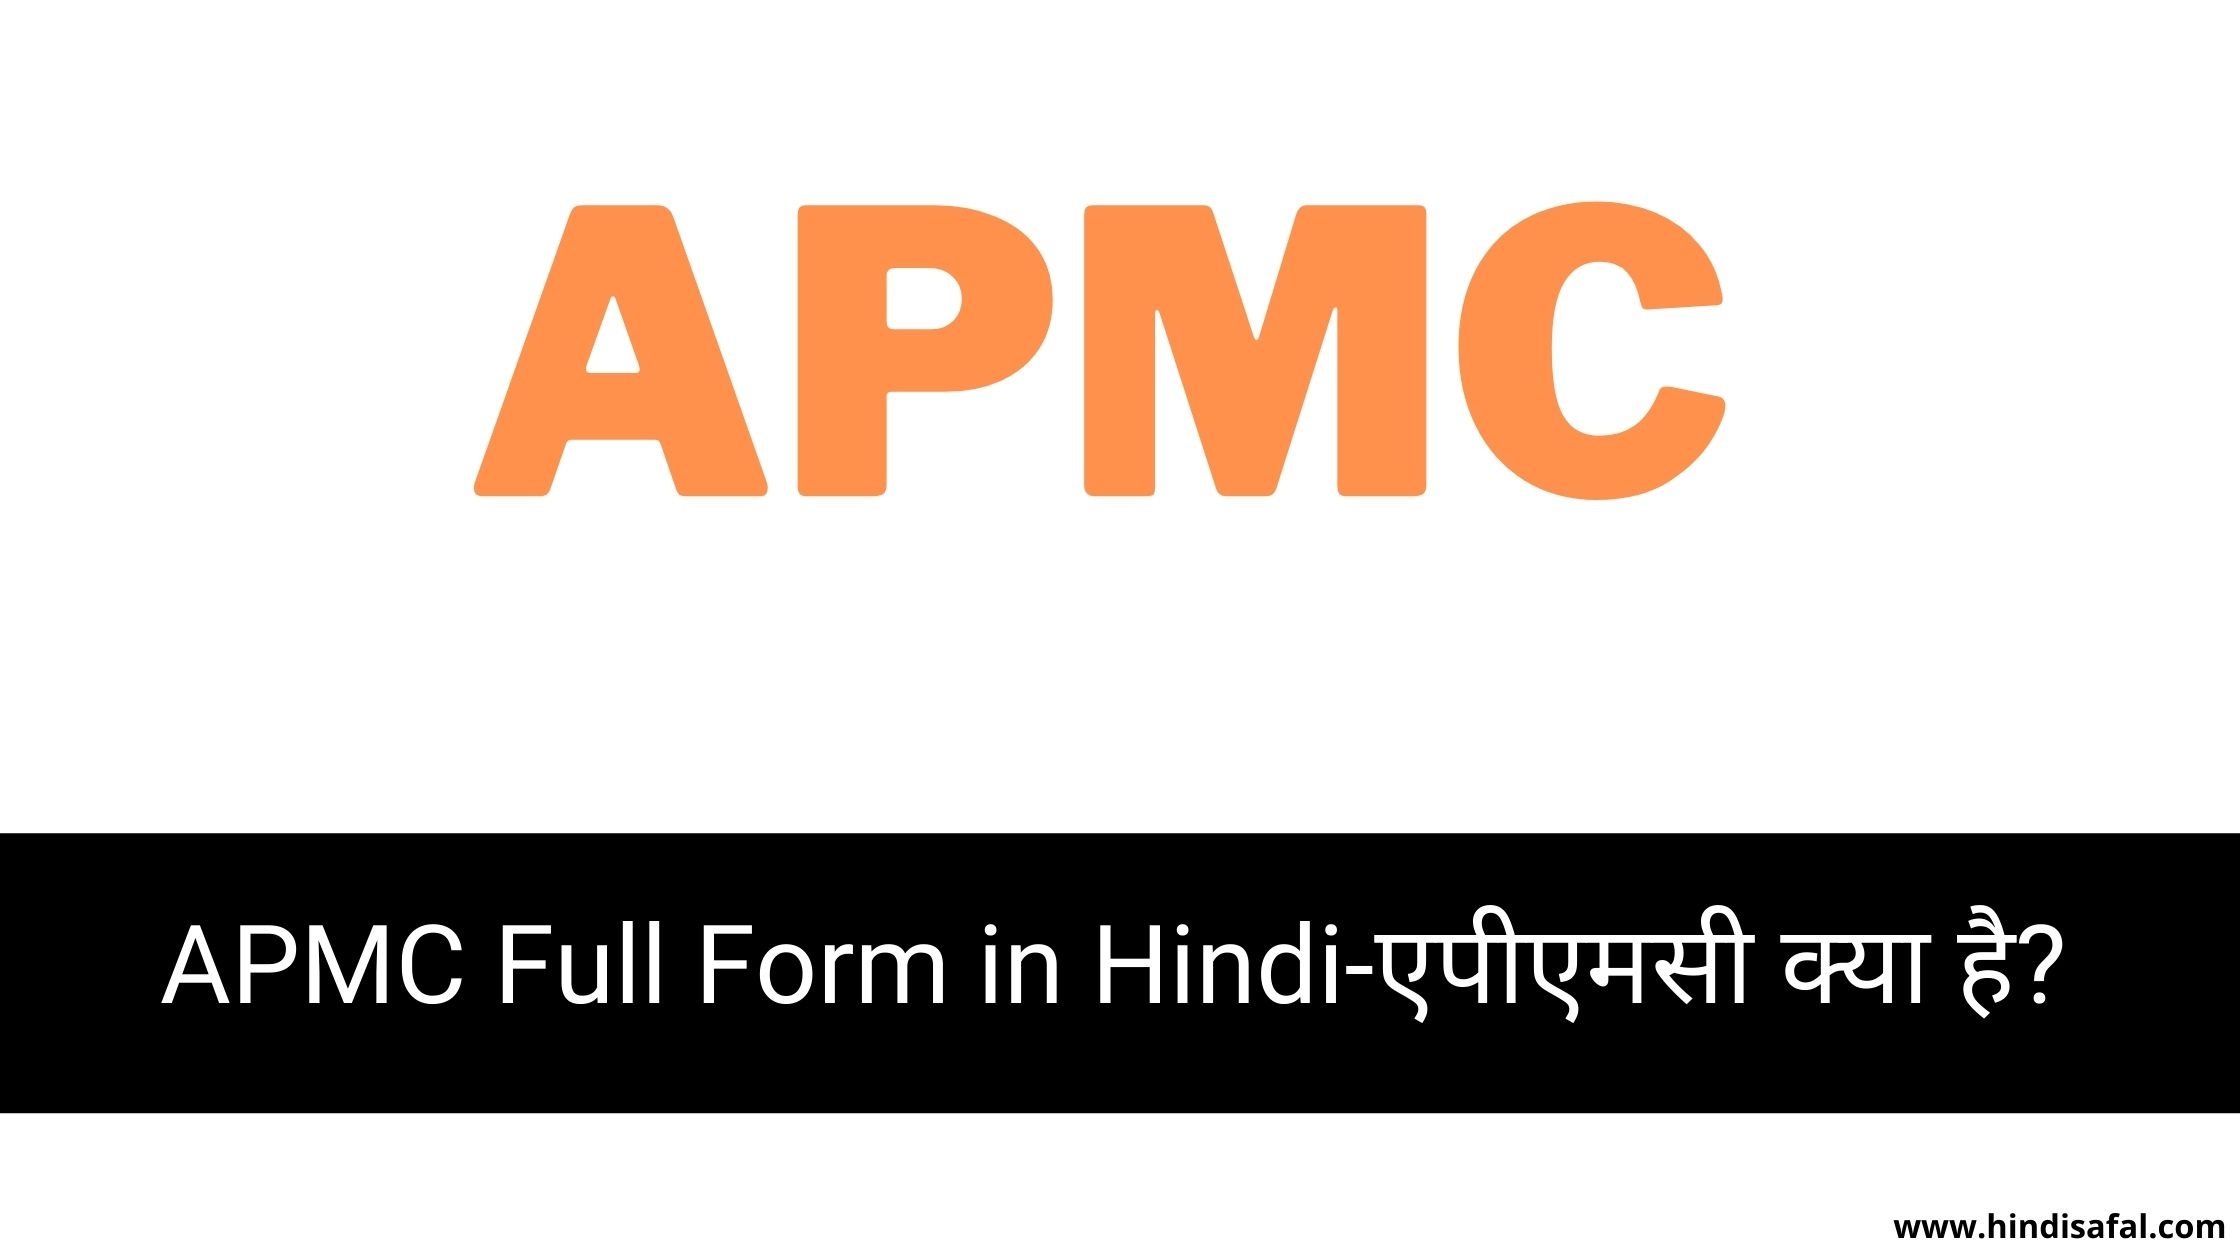 APMC Full Form in Hindi